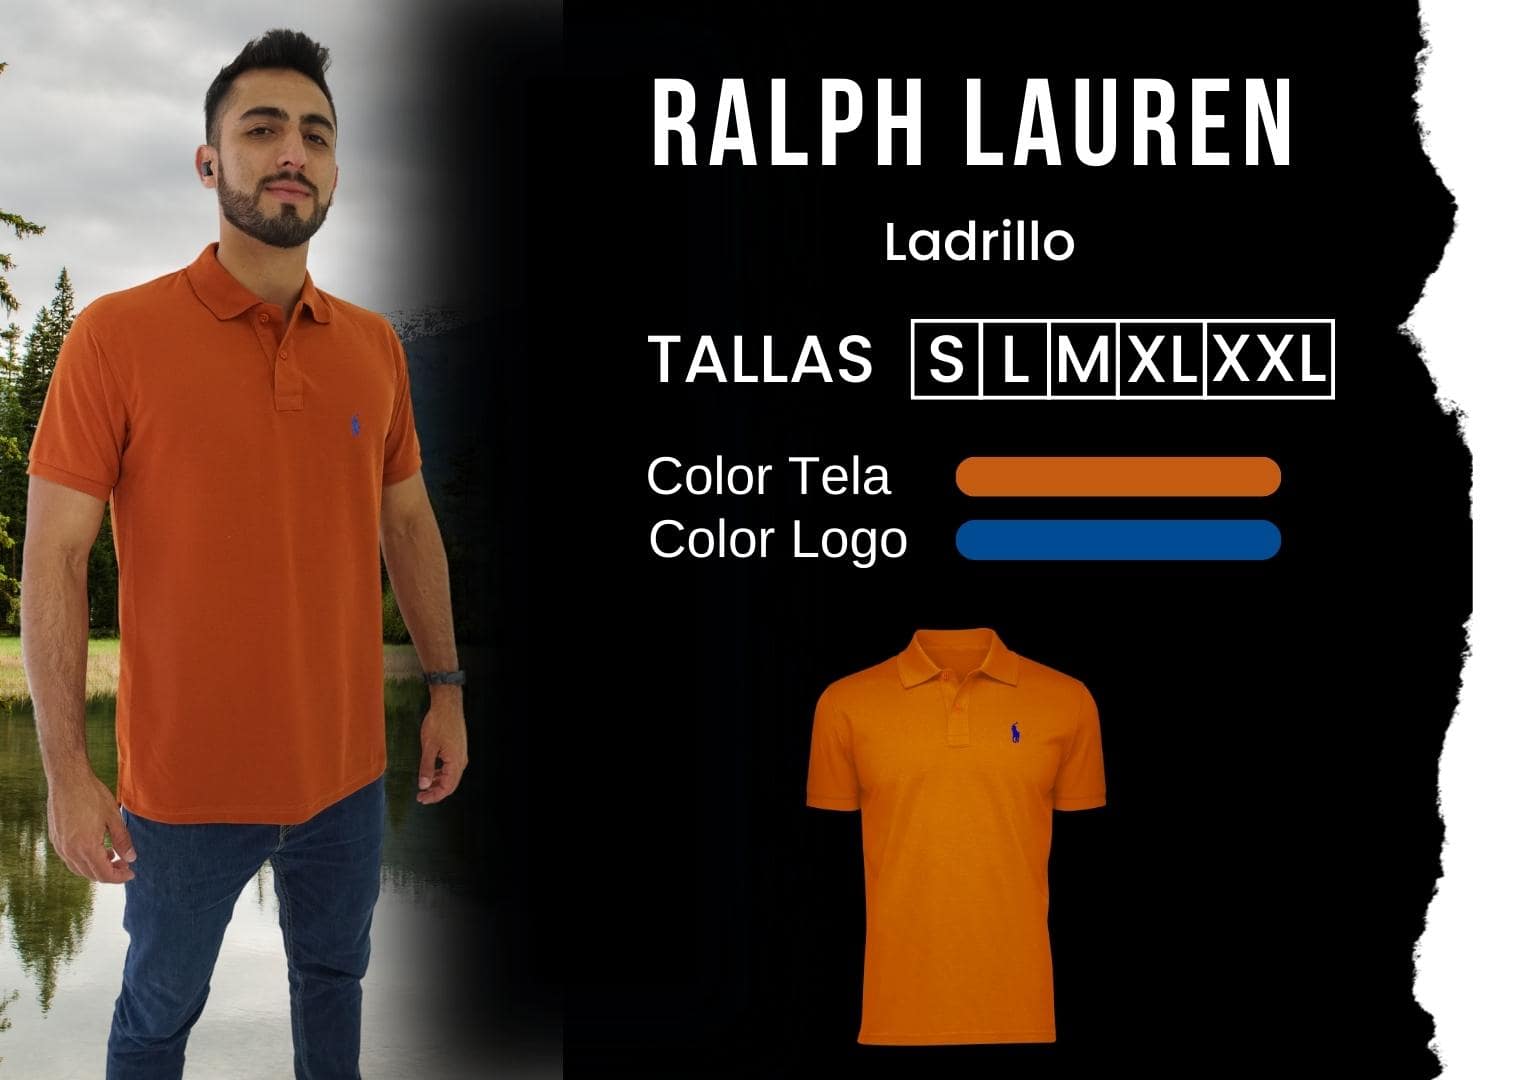 camiseta Ralph Lauren polo hombre tienda olevan color ladrillo